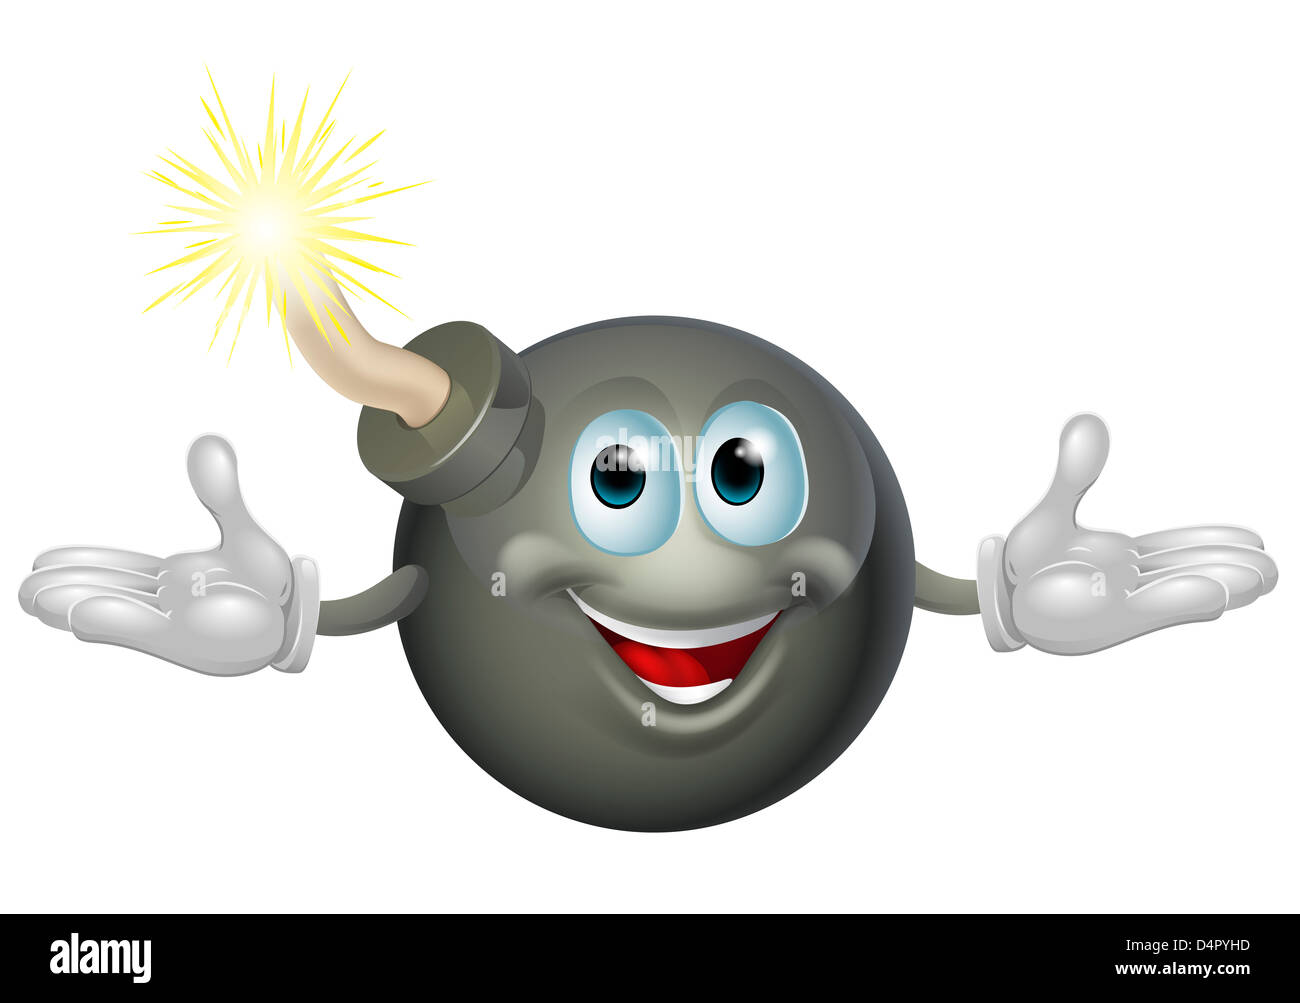 An illustration of a cute happy bomb cartoon character Stock Photo